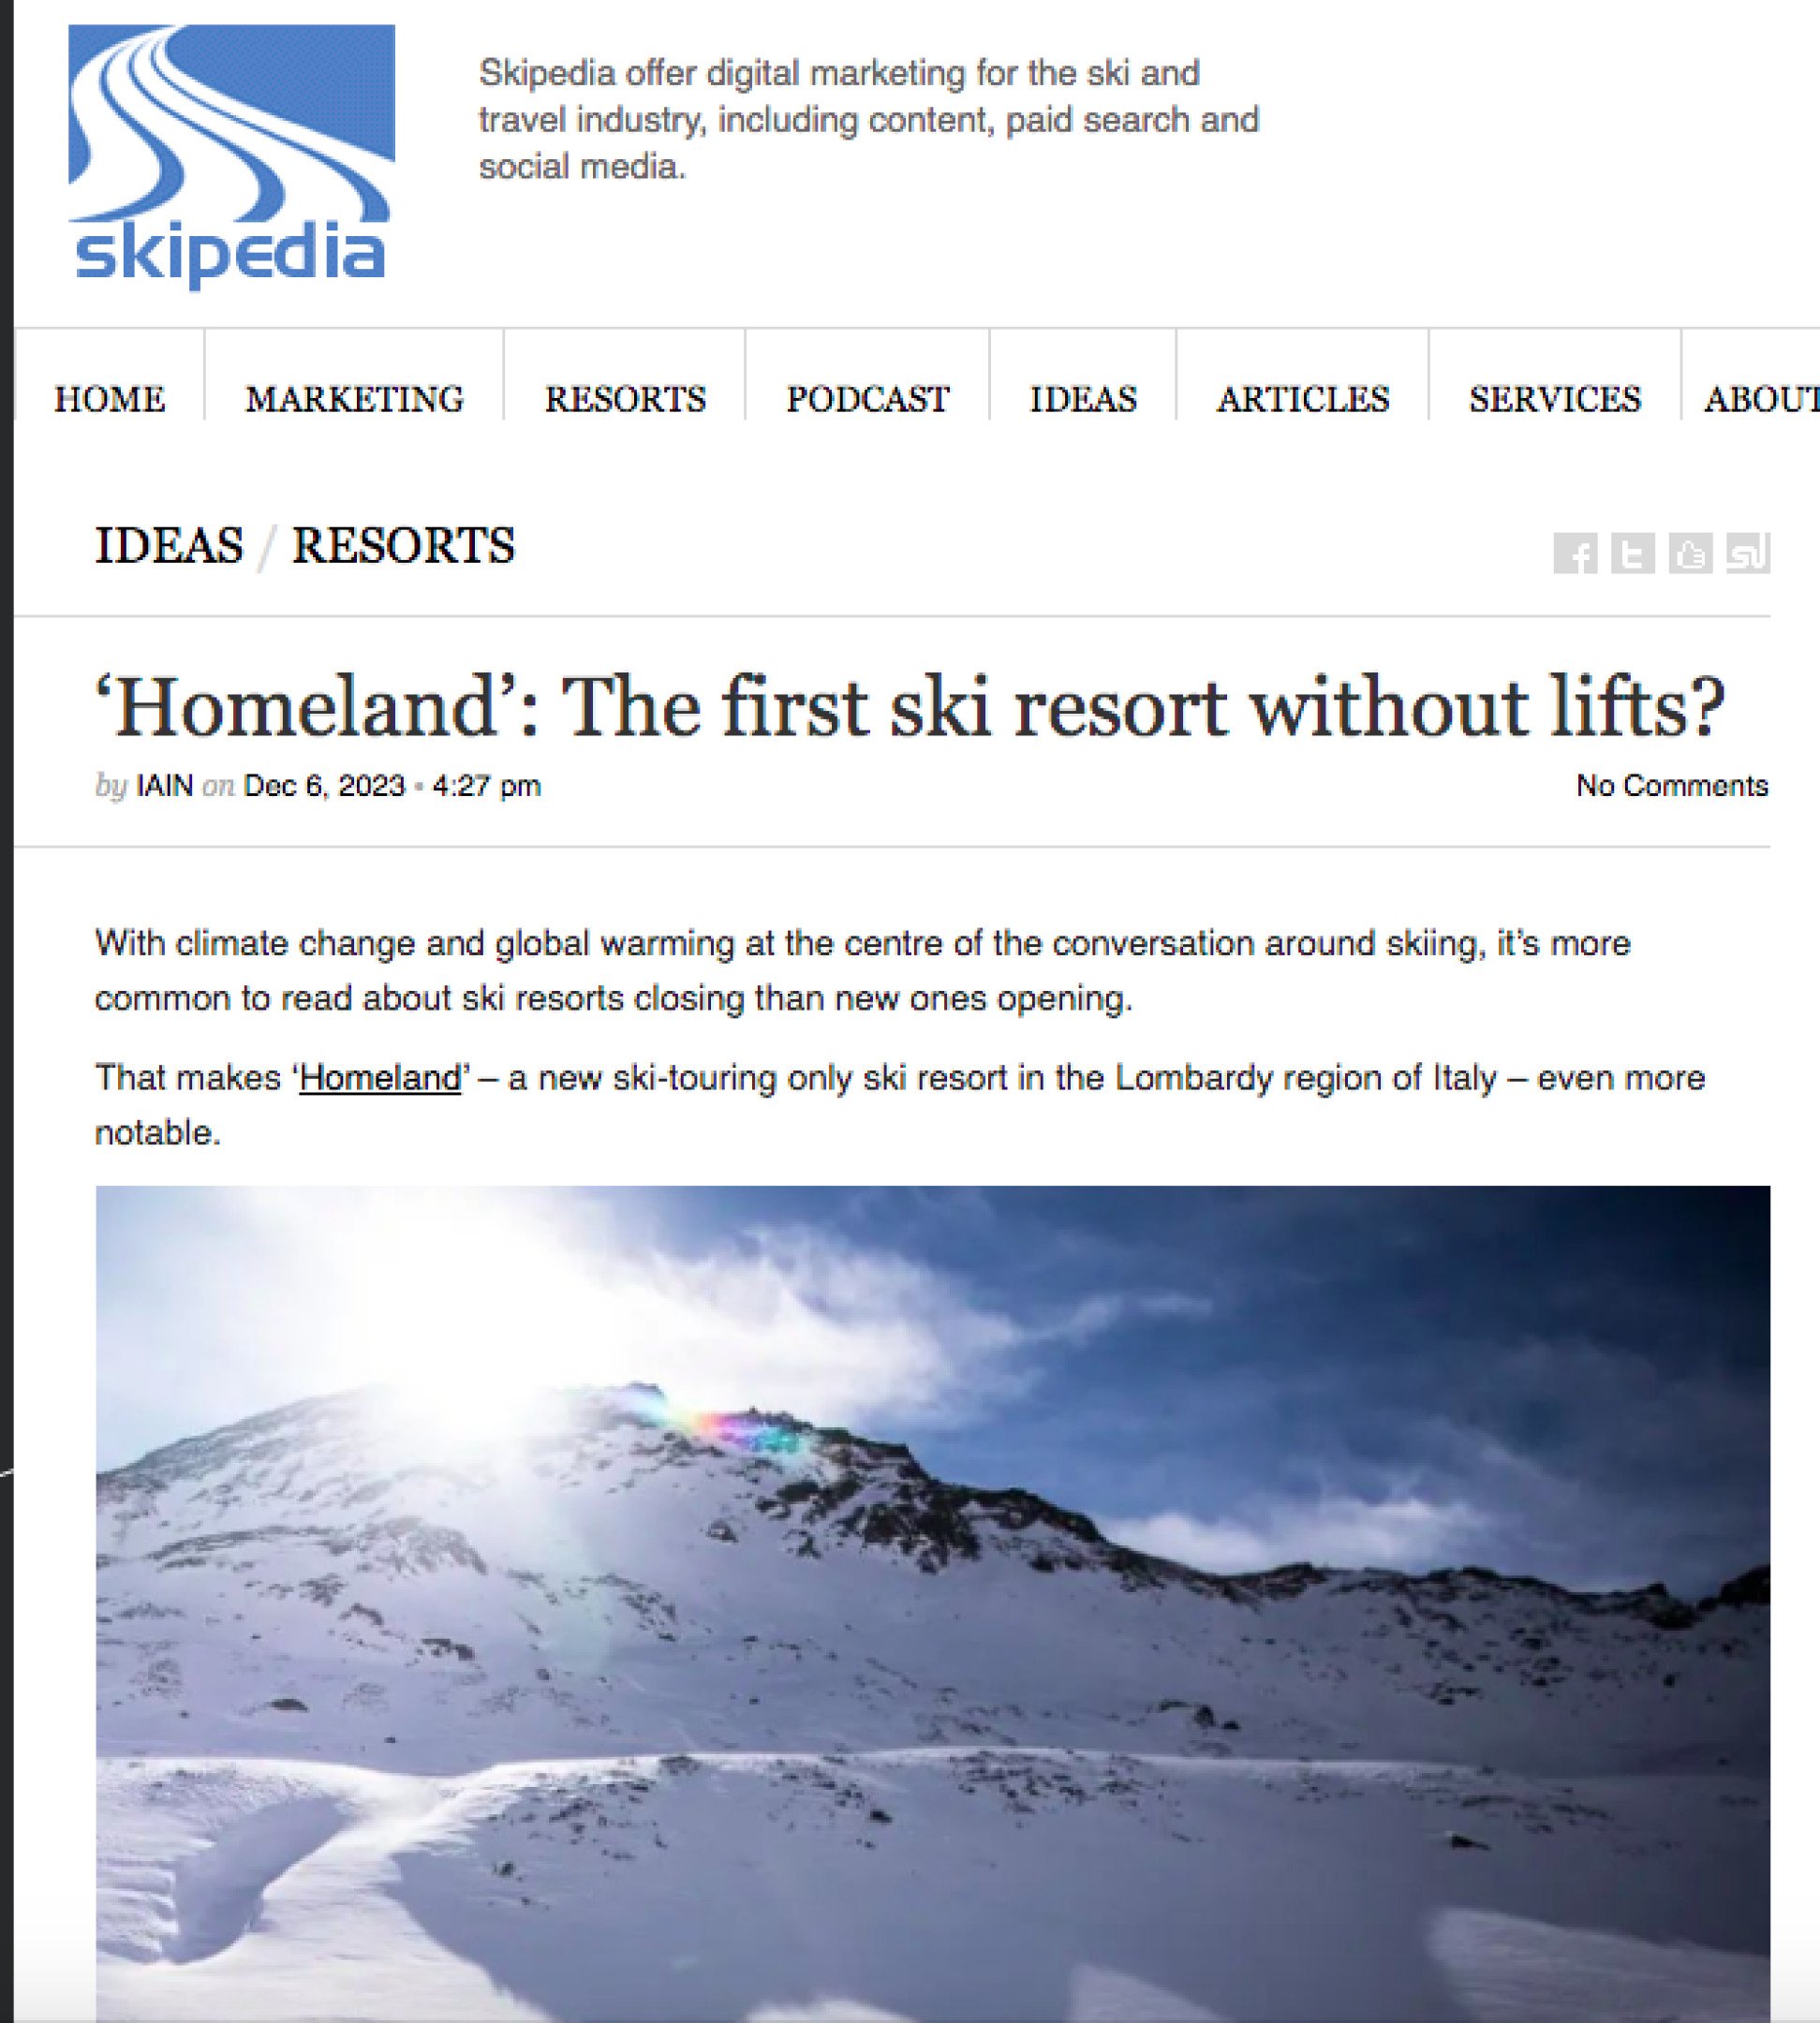 Skipedia on Homeland